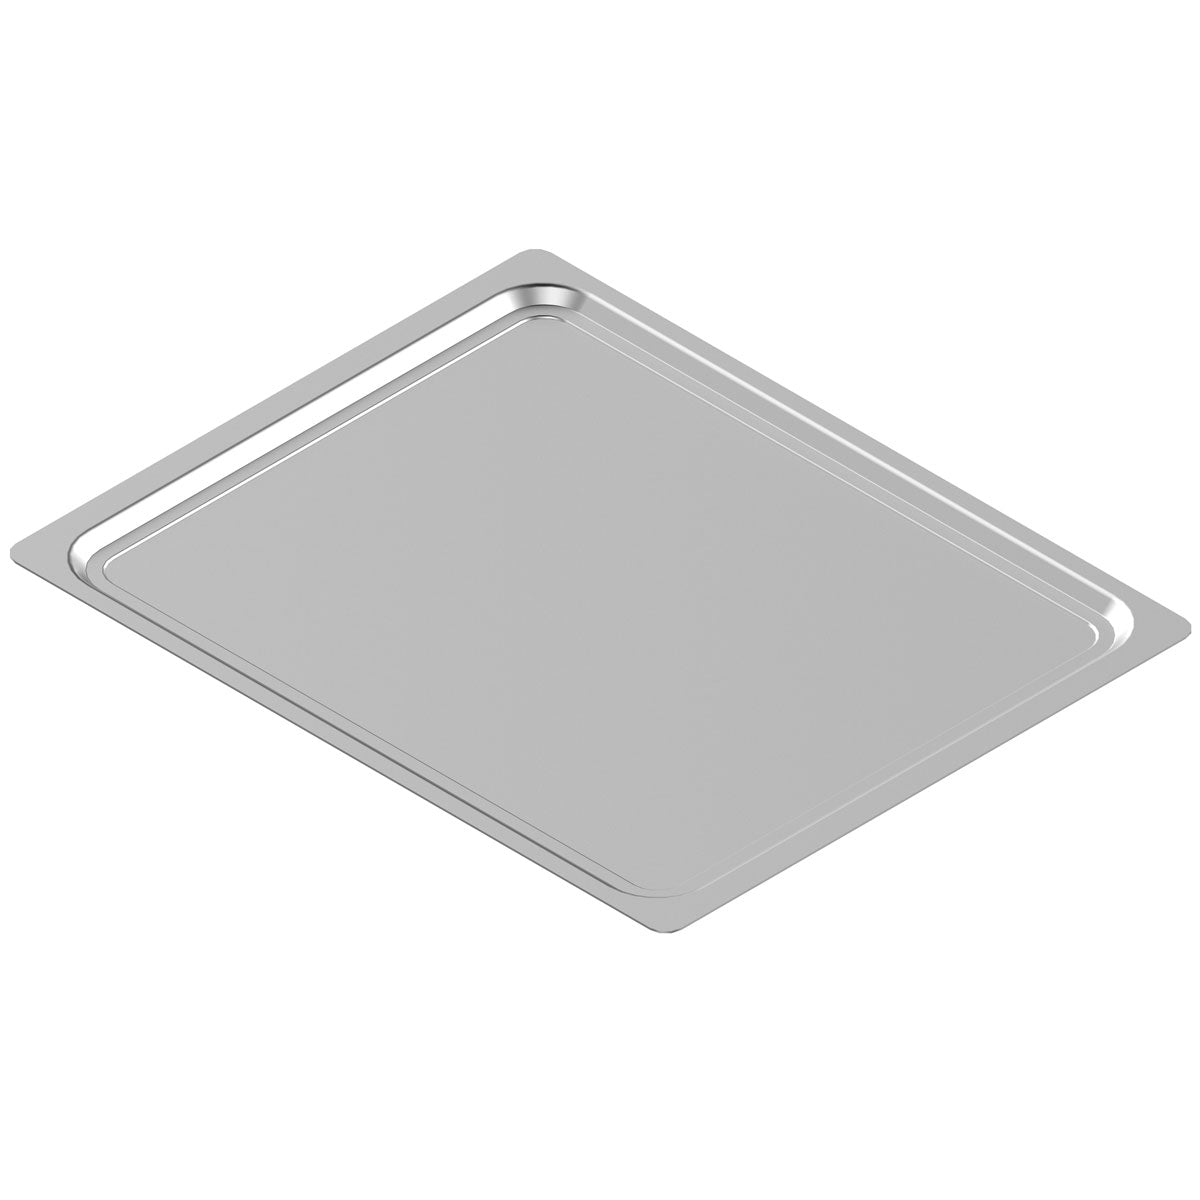 Aluminiumsplater til varmluftsovner - 429 x 345 mm